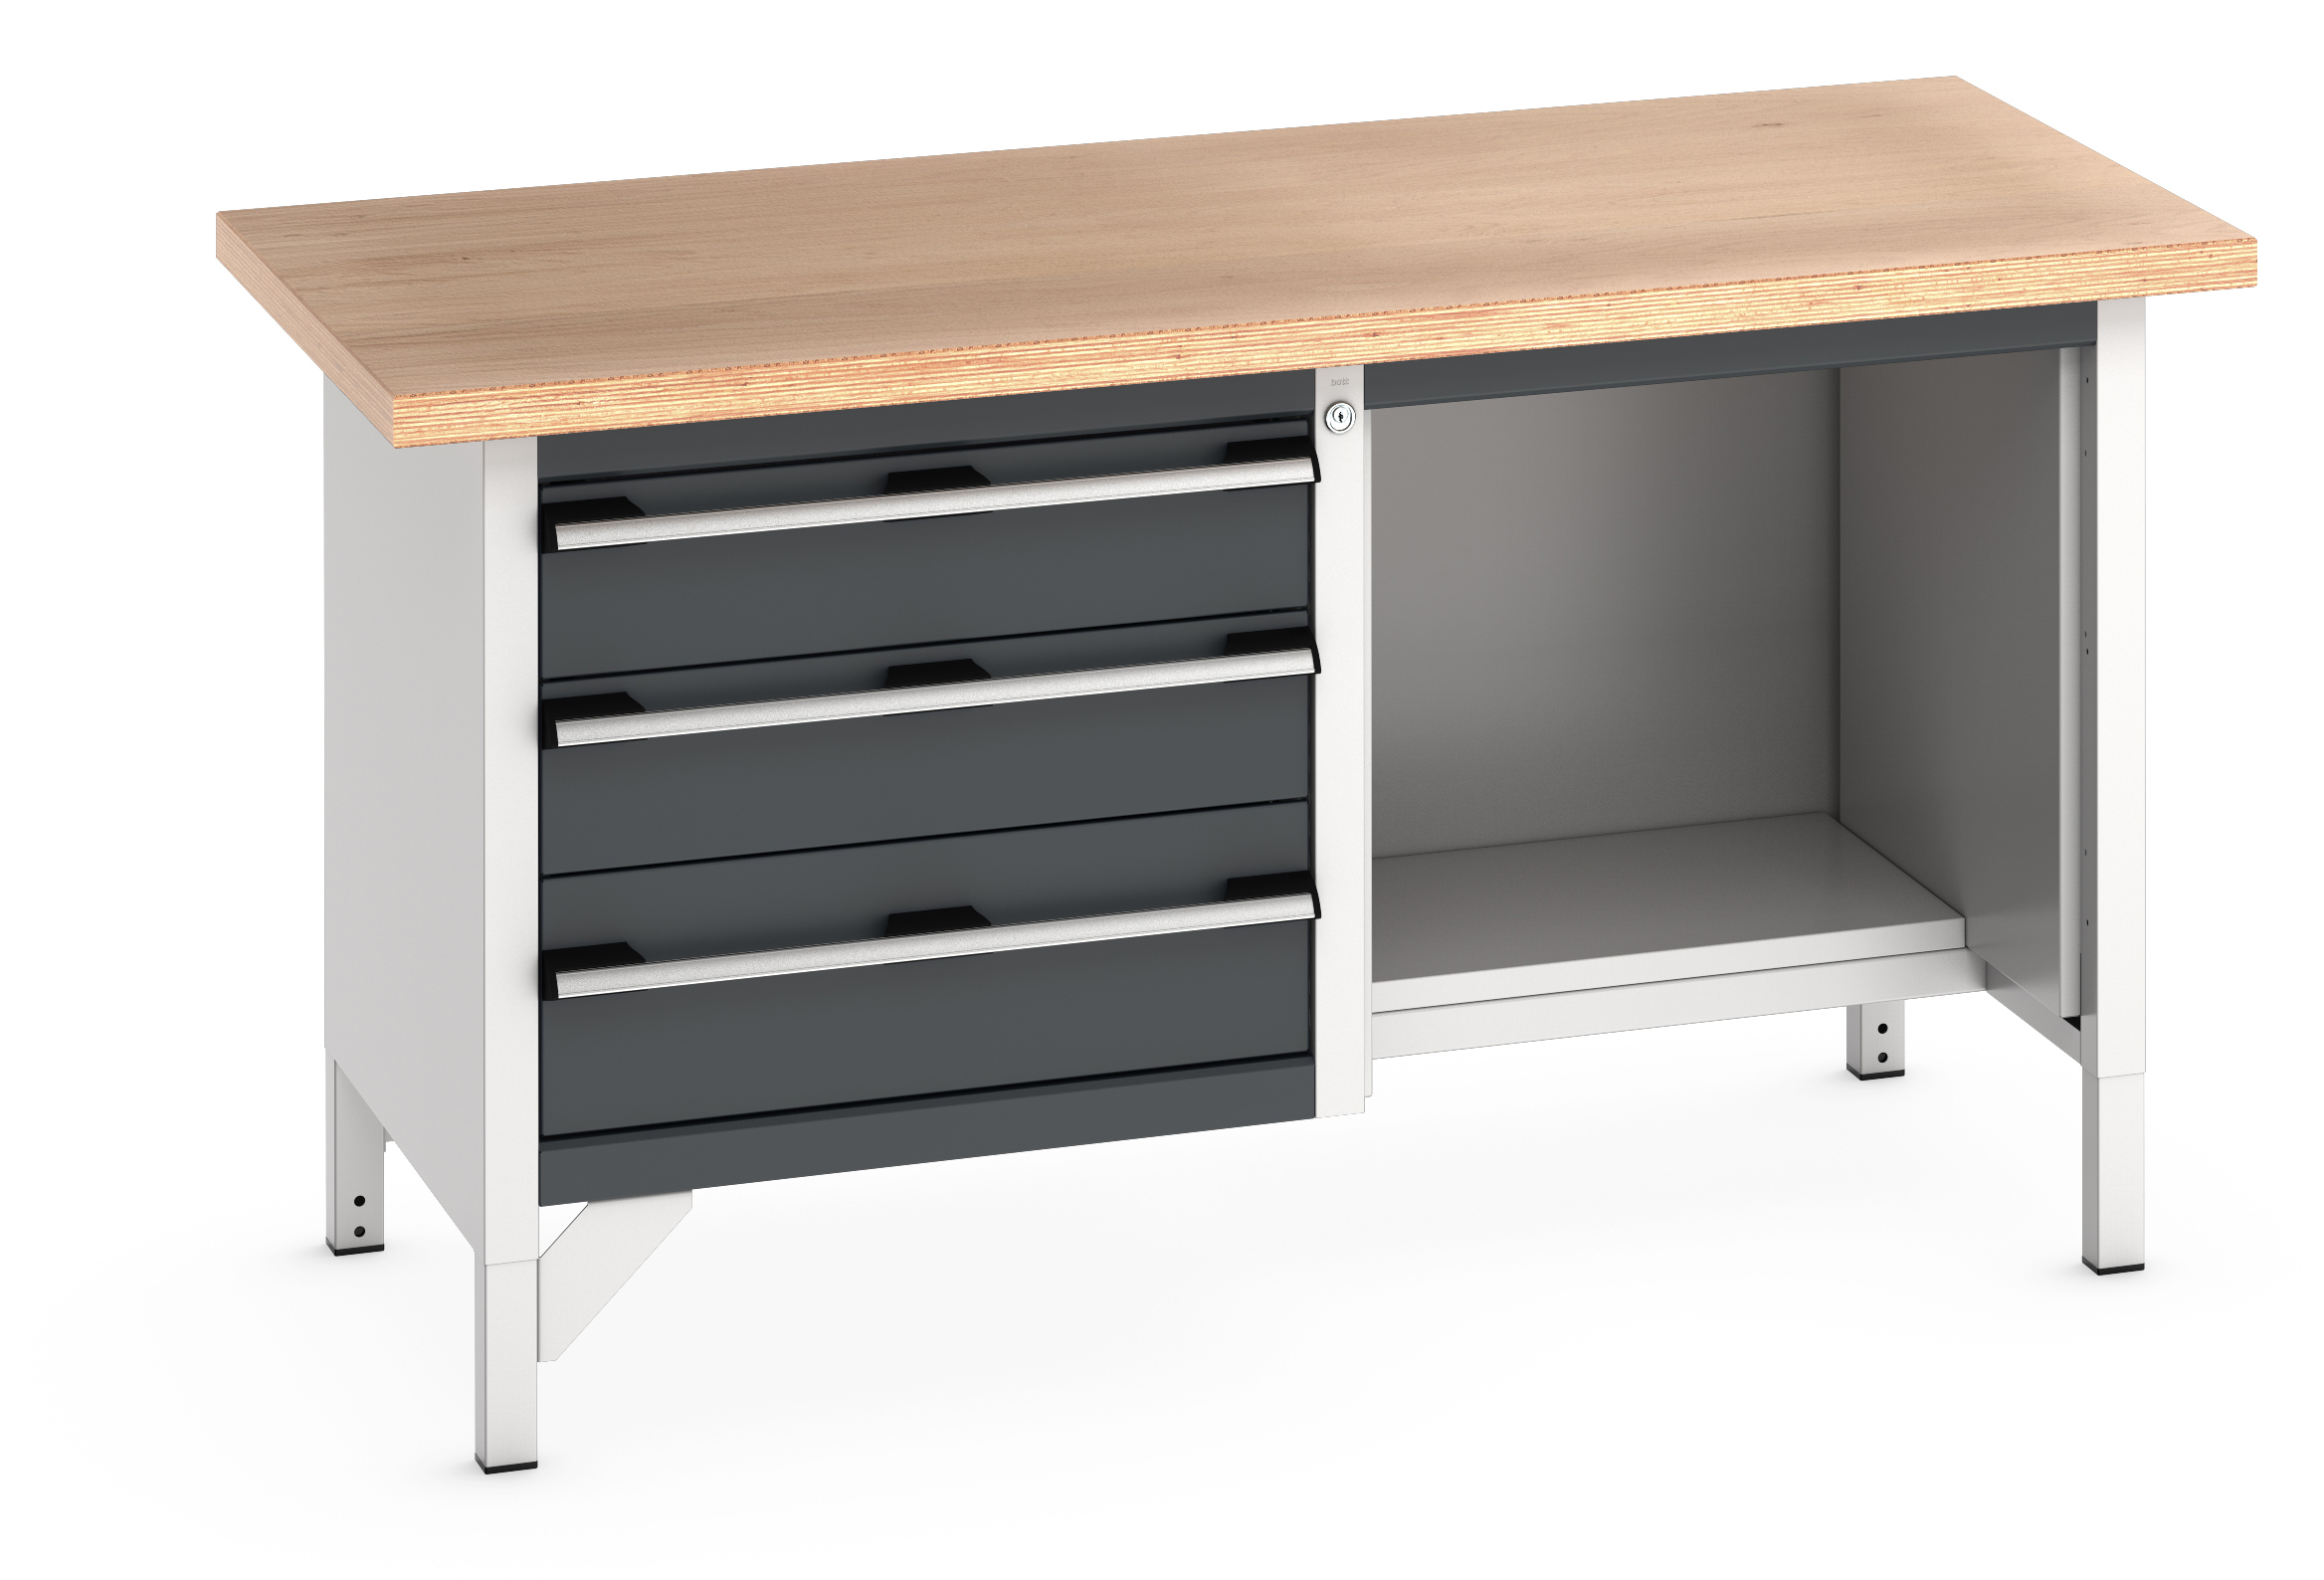 Bott Cubio Storage Bench With 3 Drawer Cabinet / Open With Half Depth Base Shelf - 41002040.19V